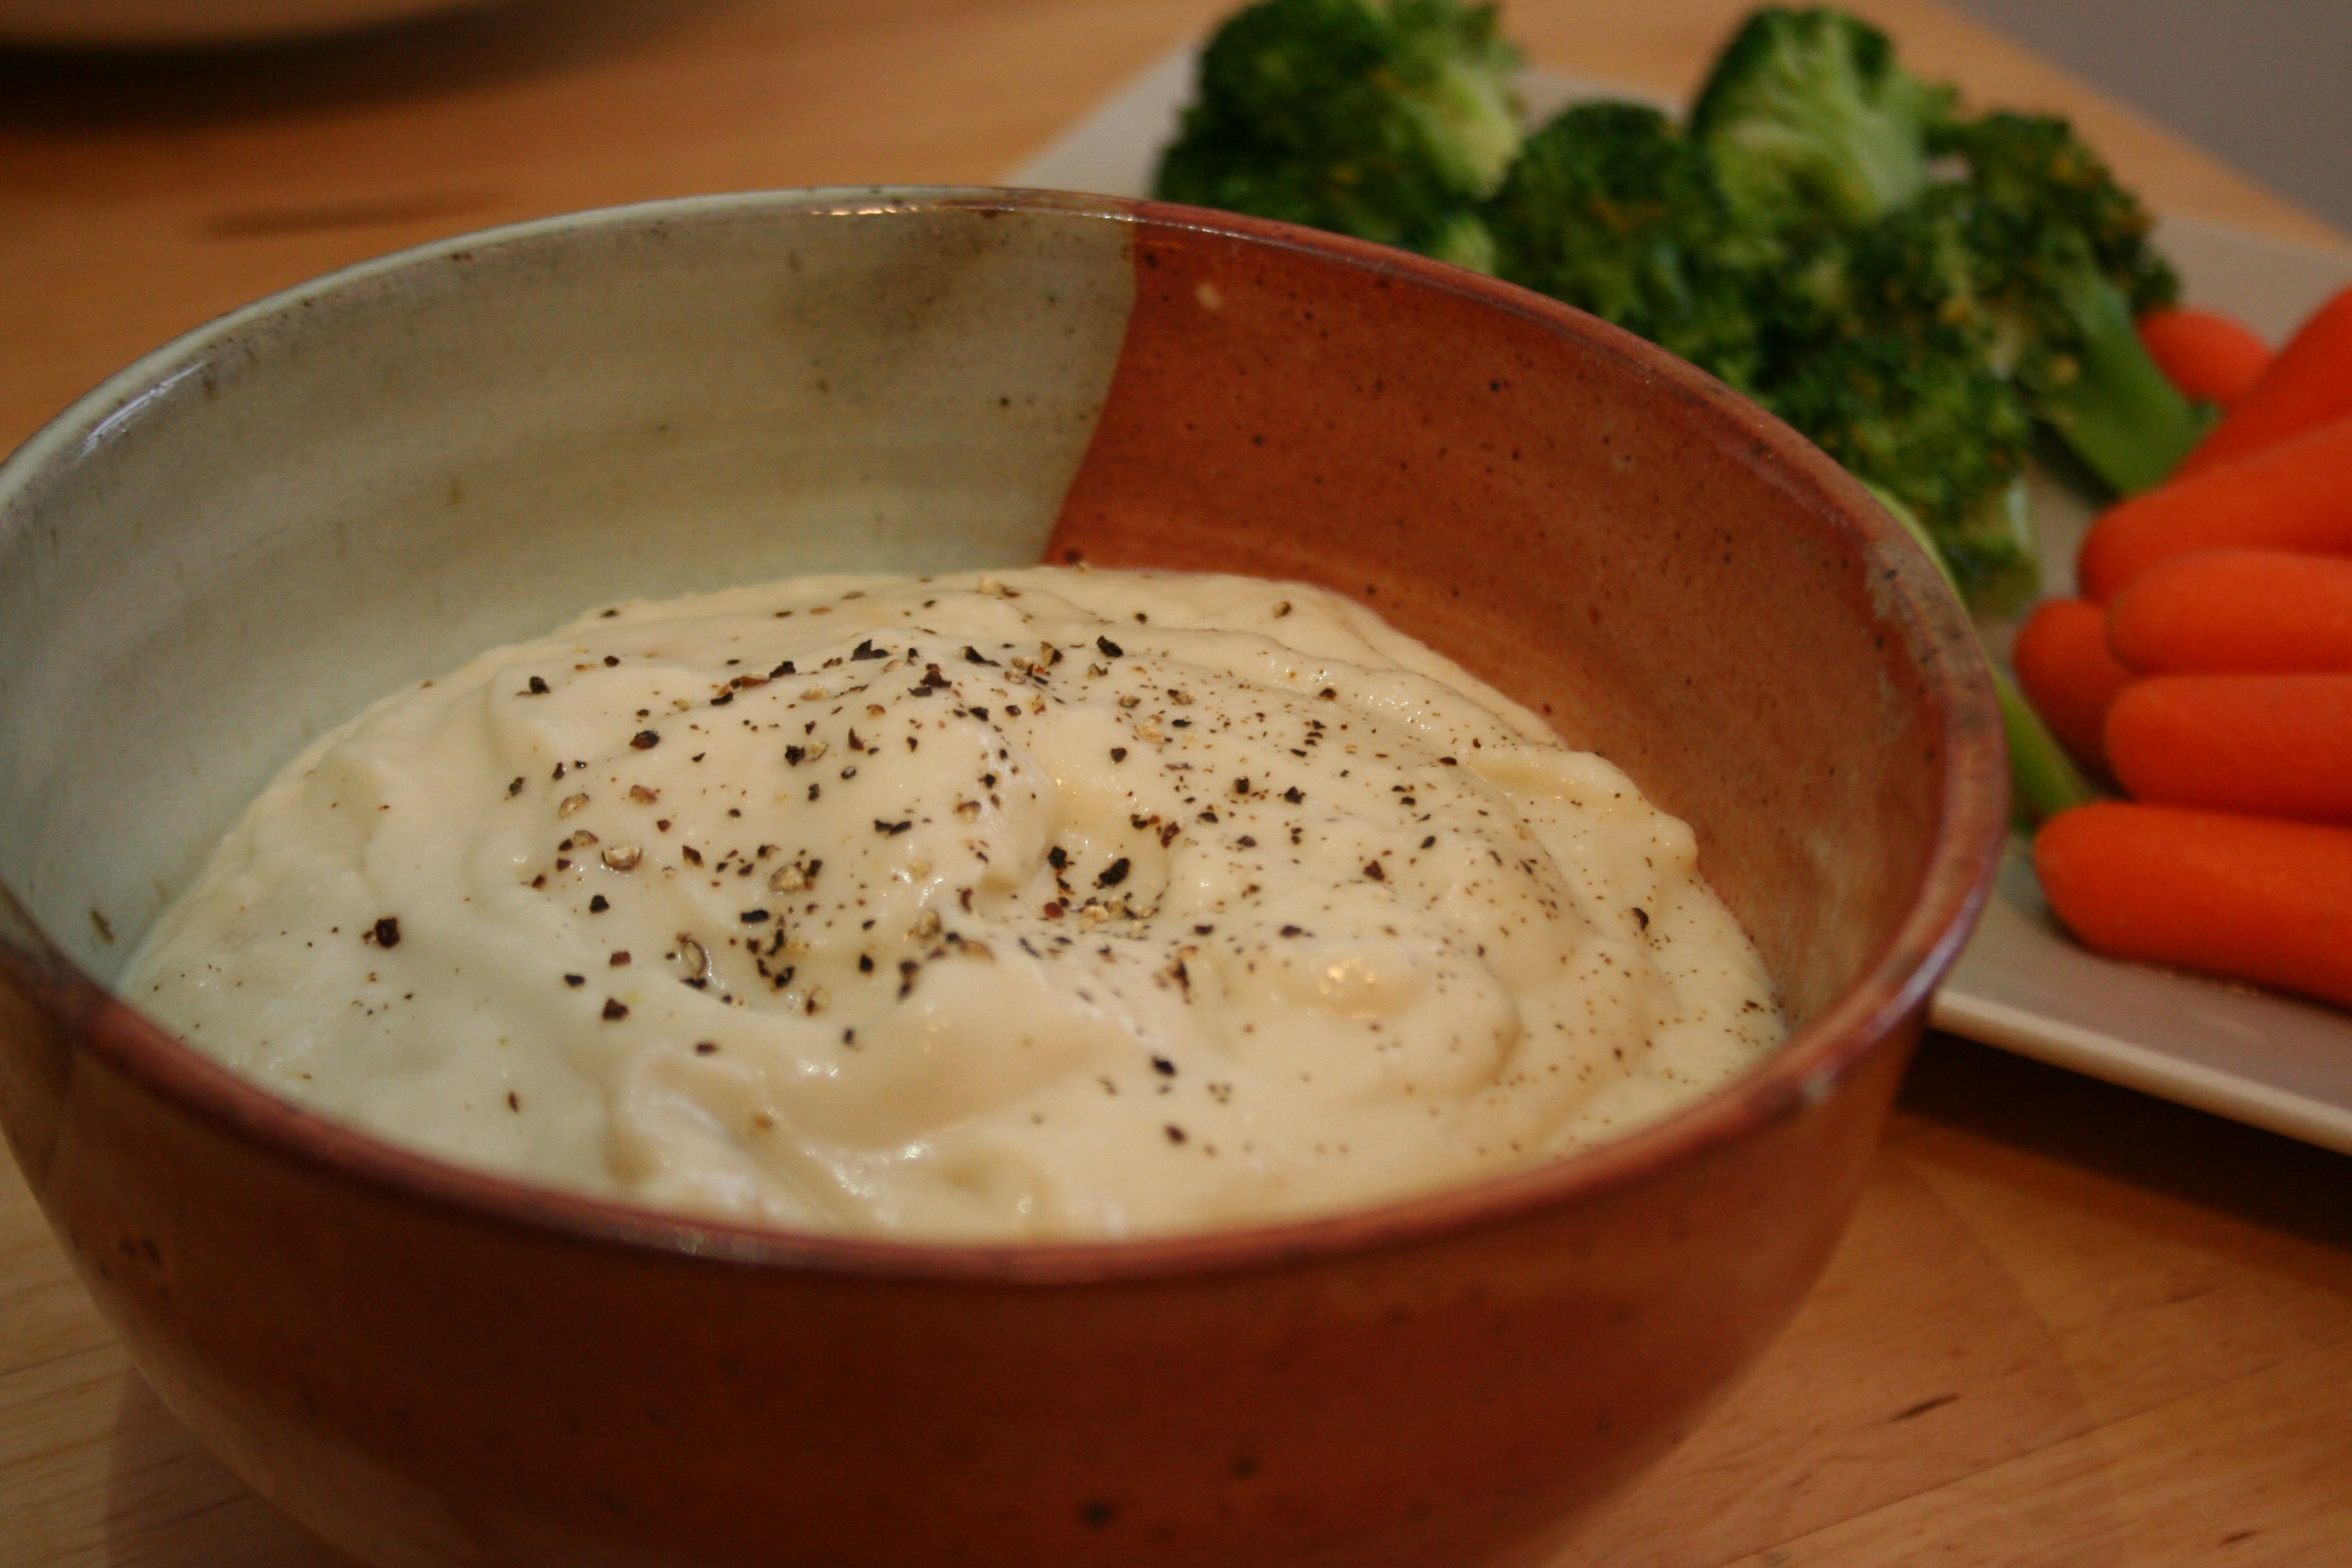 Superbowl solved: roasted garlic cheese dip